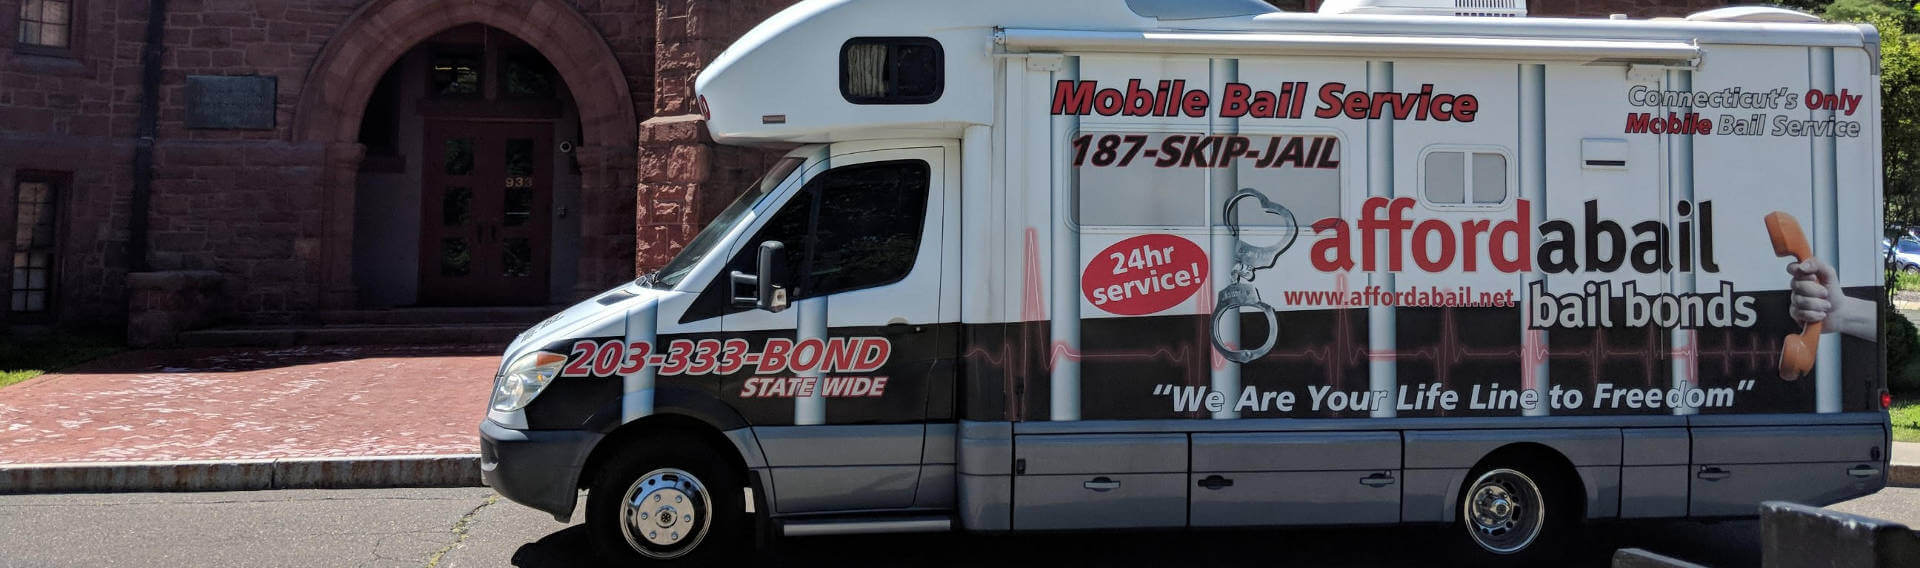 Mobile bail bonds service in Simsbury, CT